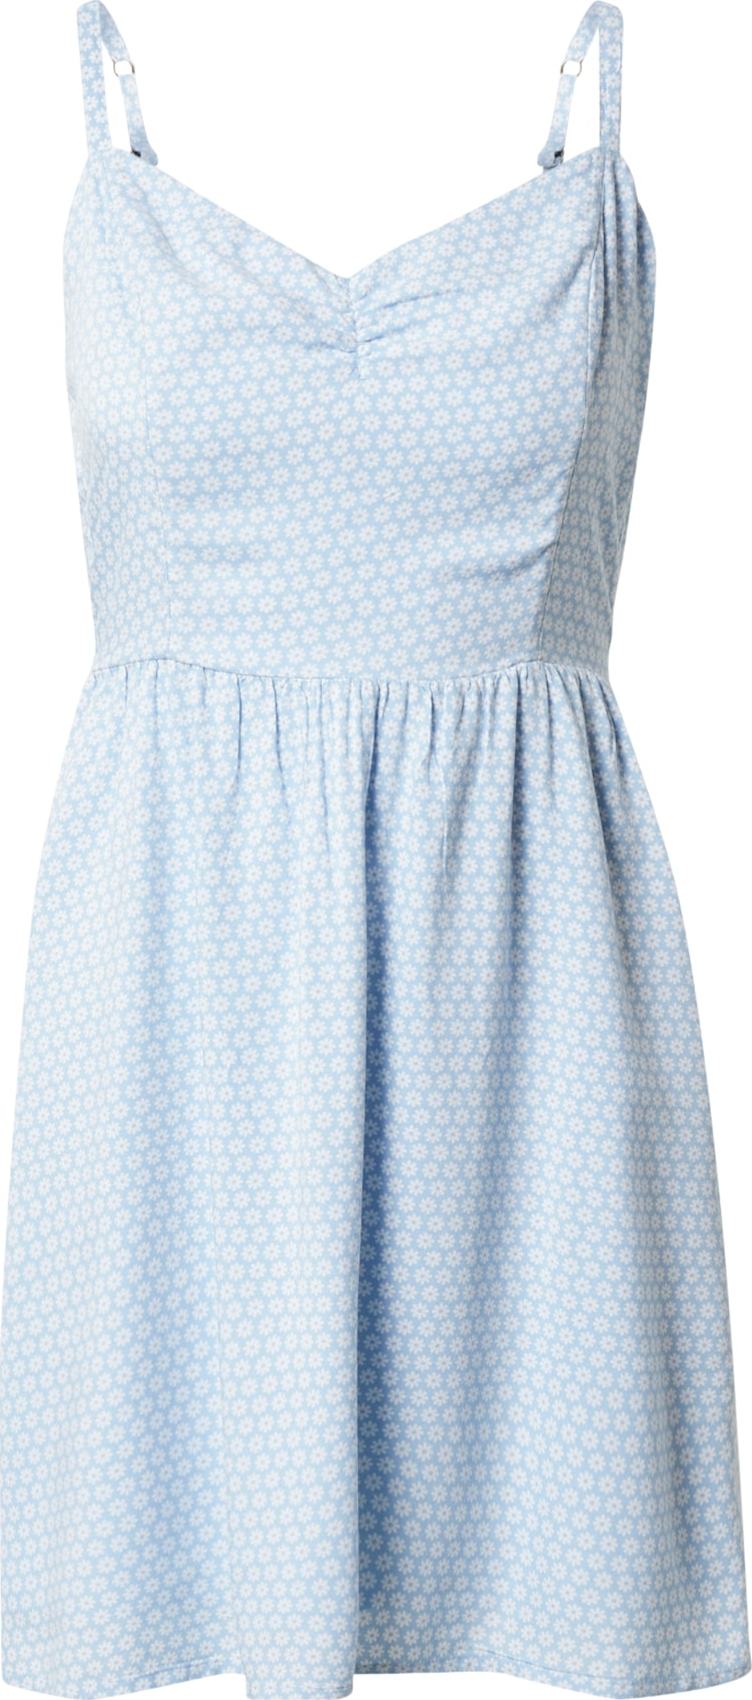 HOLLISTER Letní šaty 'APAC' světlemodrá / bílá